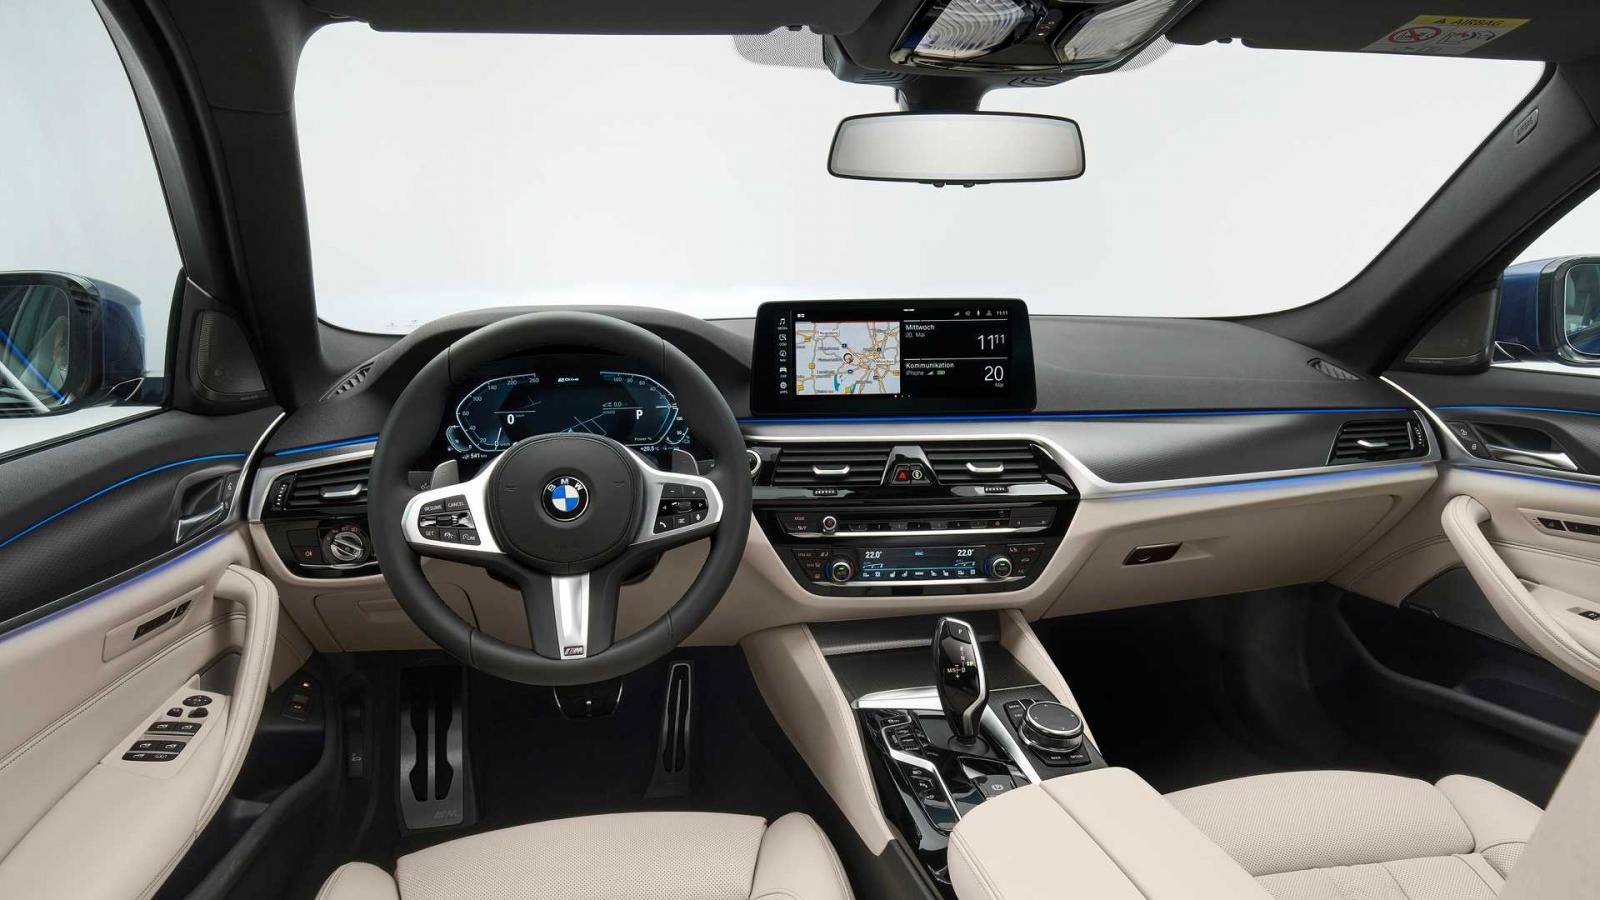 Khoang nội thất BMW 5-Series 2021